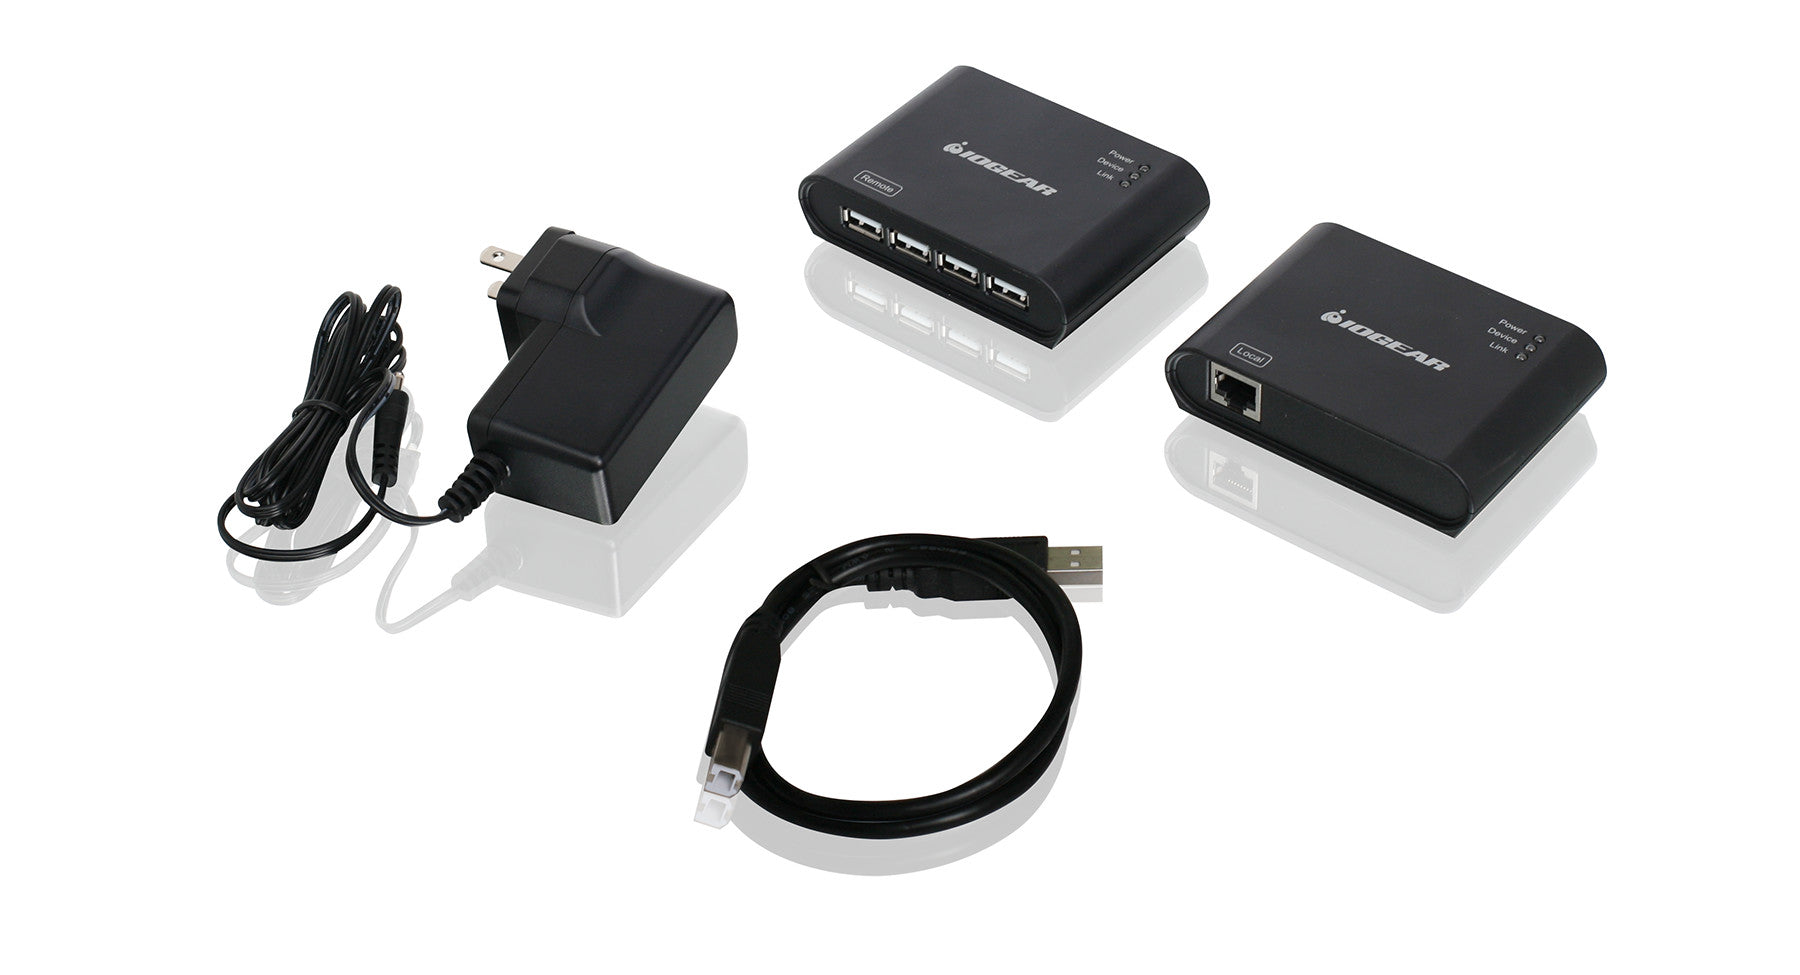 USB 2.0 4-Port BoostLinq Ethernet - 164ft, USB Extender over Cat5e/Cat6 Ethernet Cable (TAA)